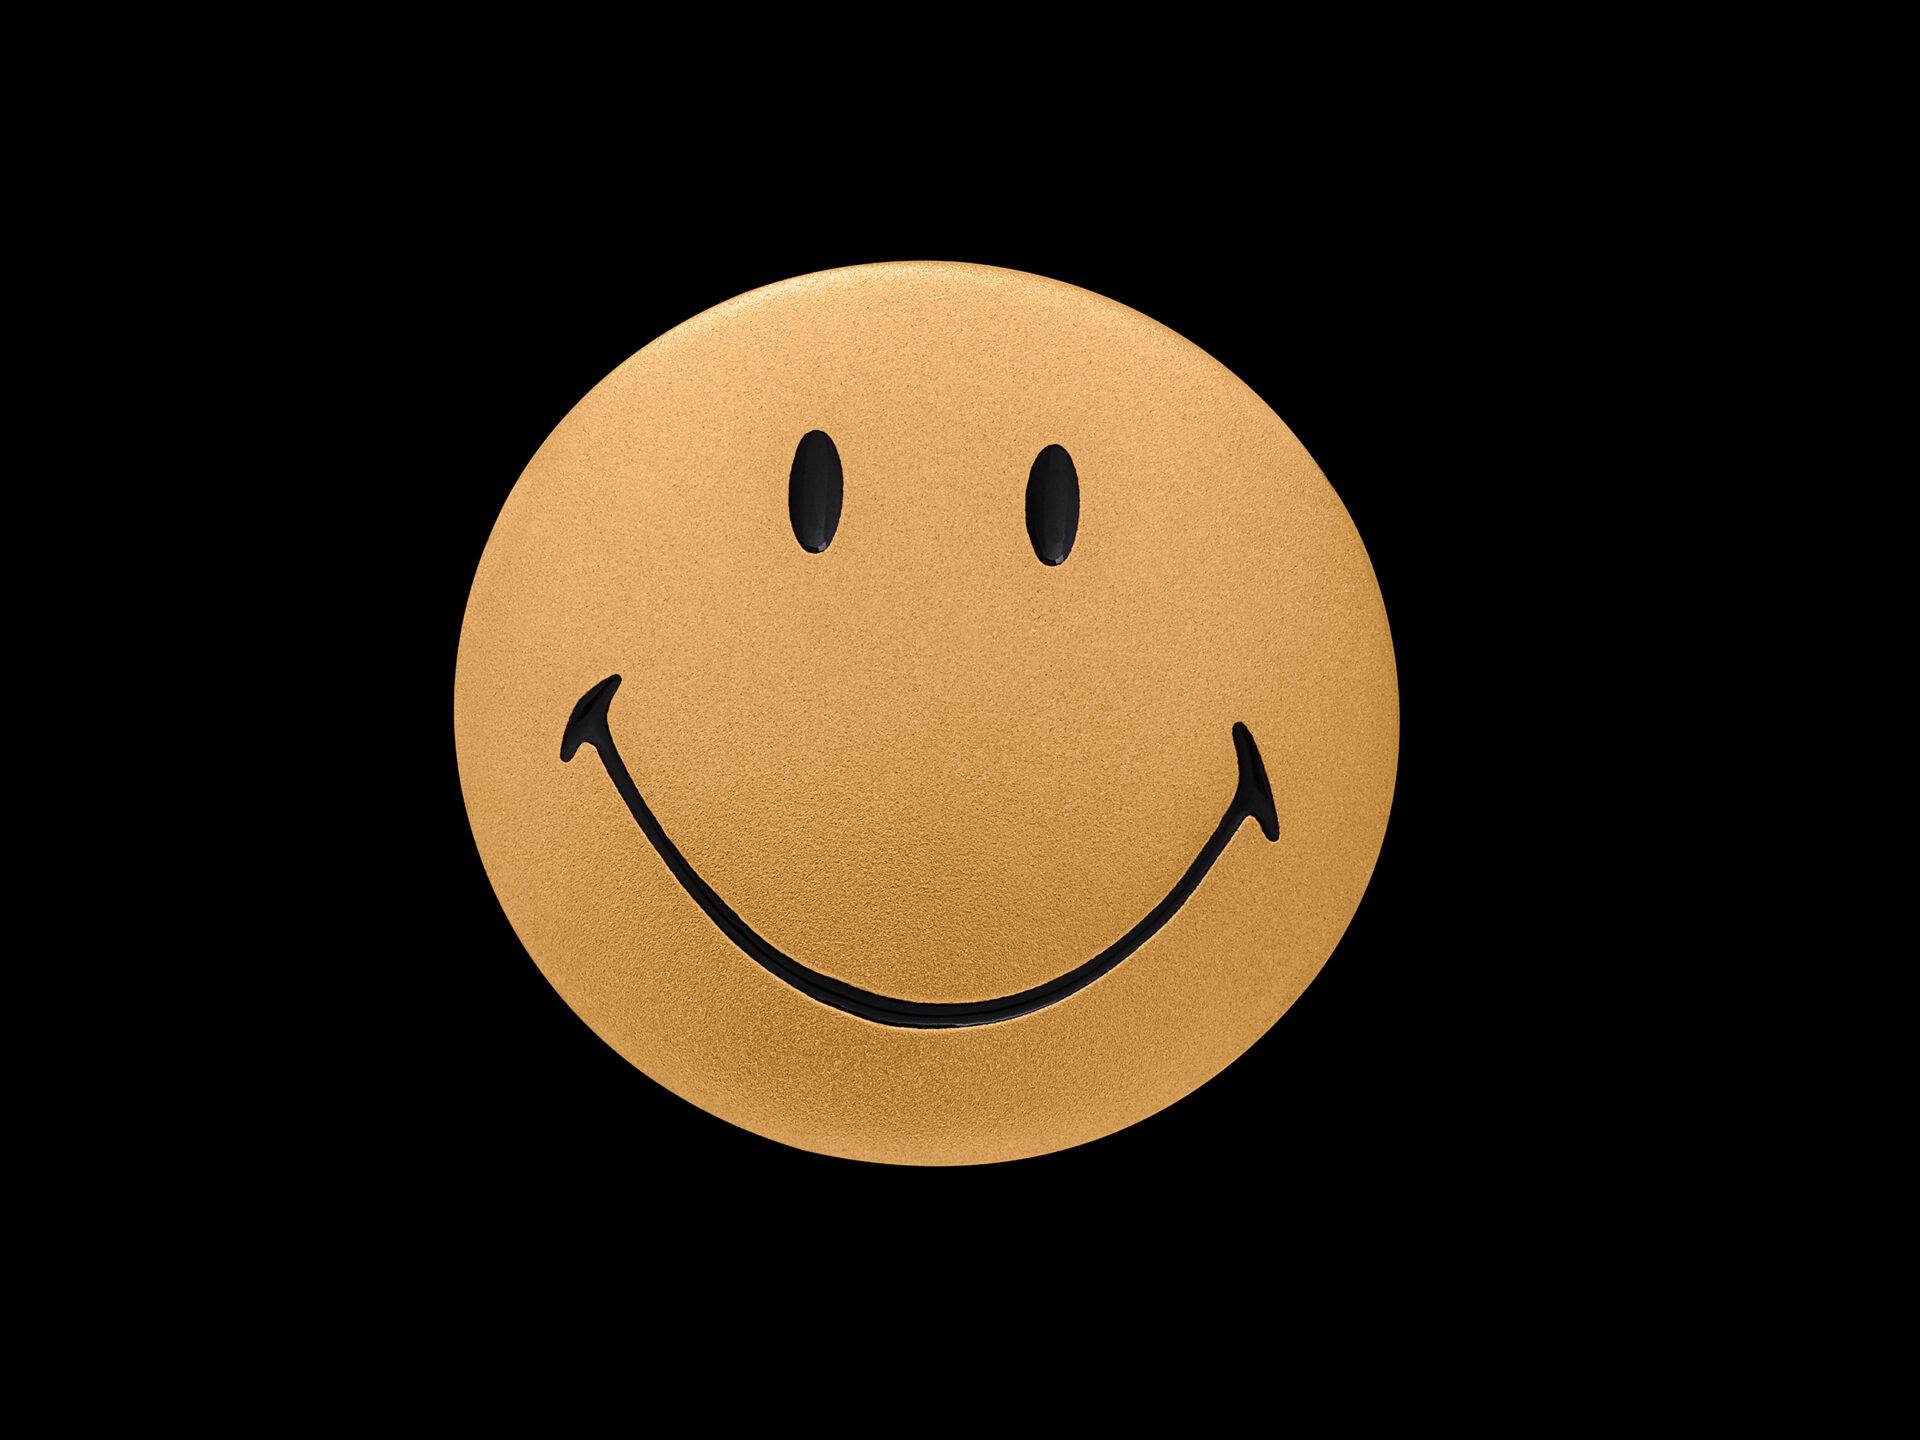 Detalle smiley del RM 88 Smiley Richard Mille